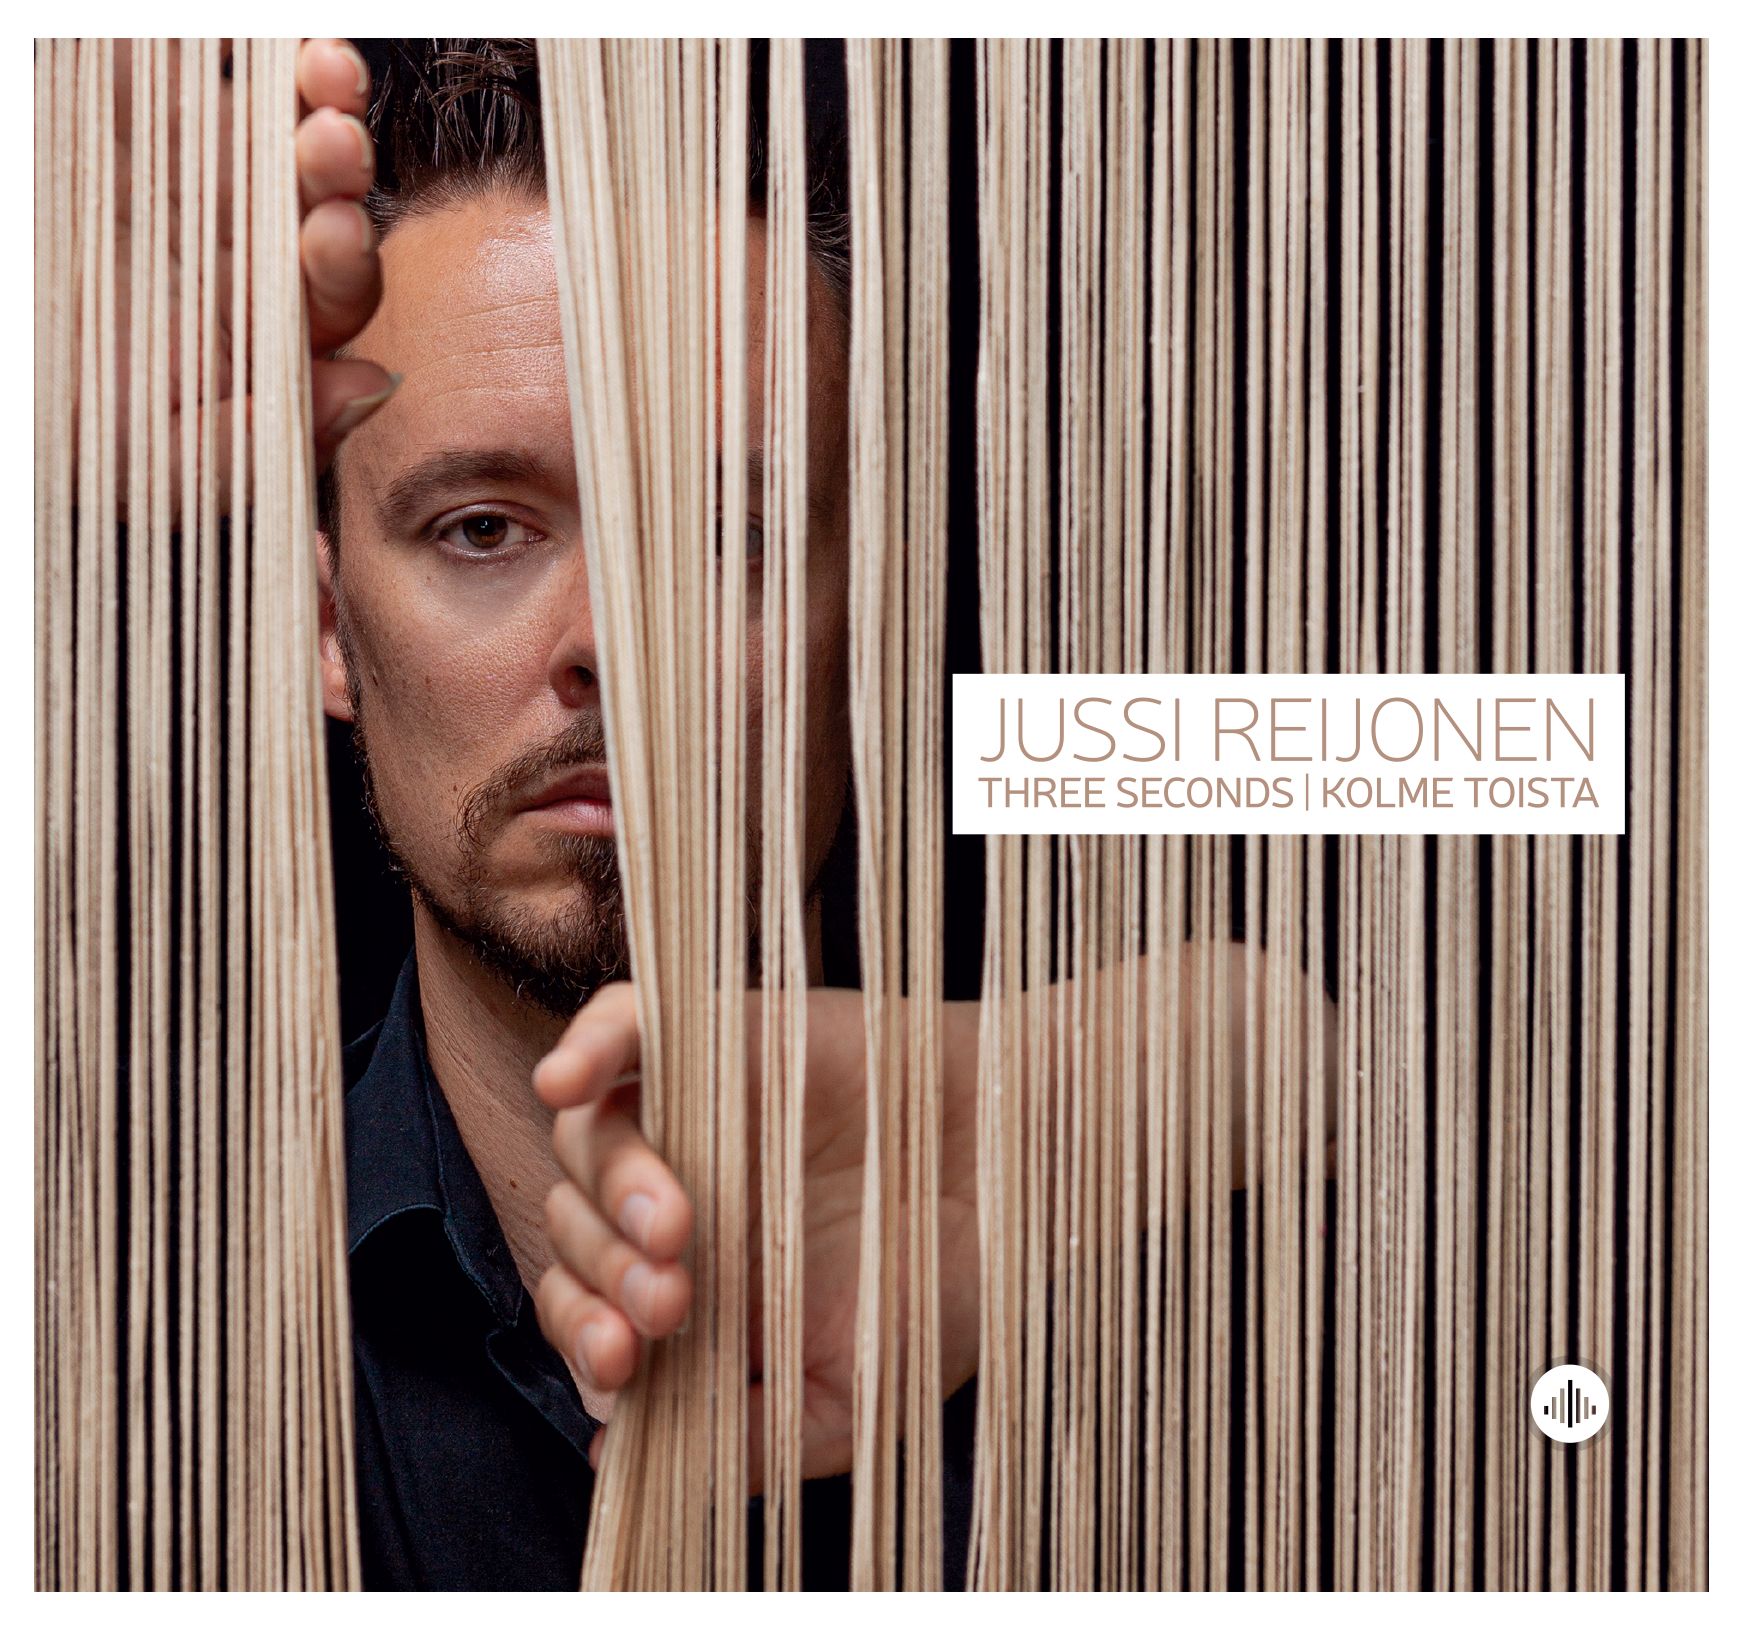 Jussi Reijonen - Three Seconds Kolme Toista - CD Cover - Front